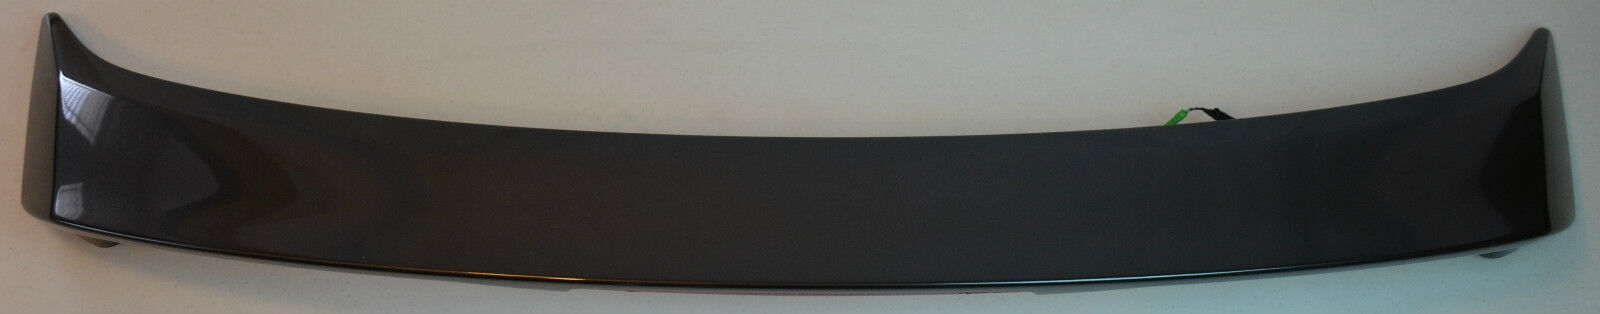 New Genuine OEM Acura 2009-2012 TSX Rear Wing Trunk Spoiler Grigio Metallic Gray